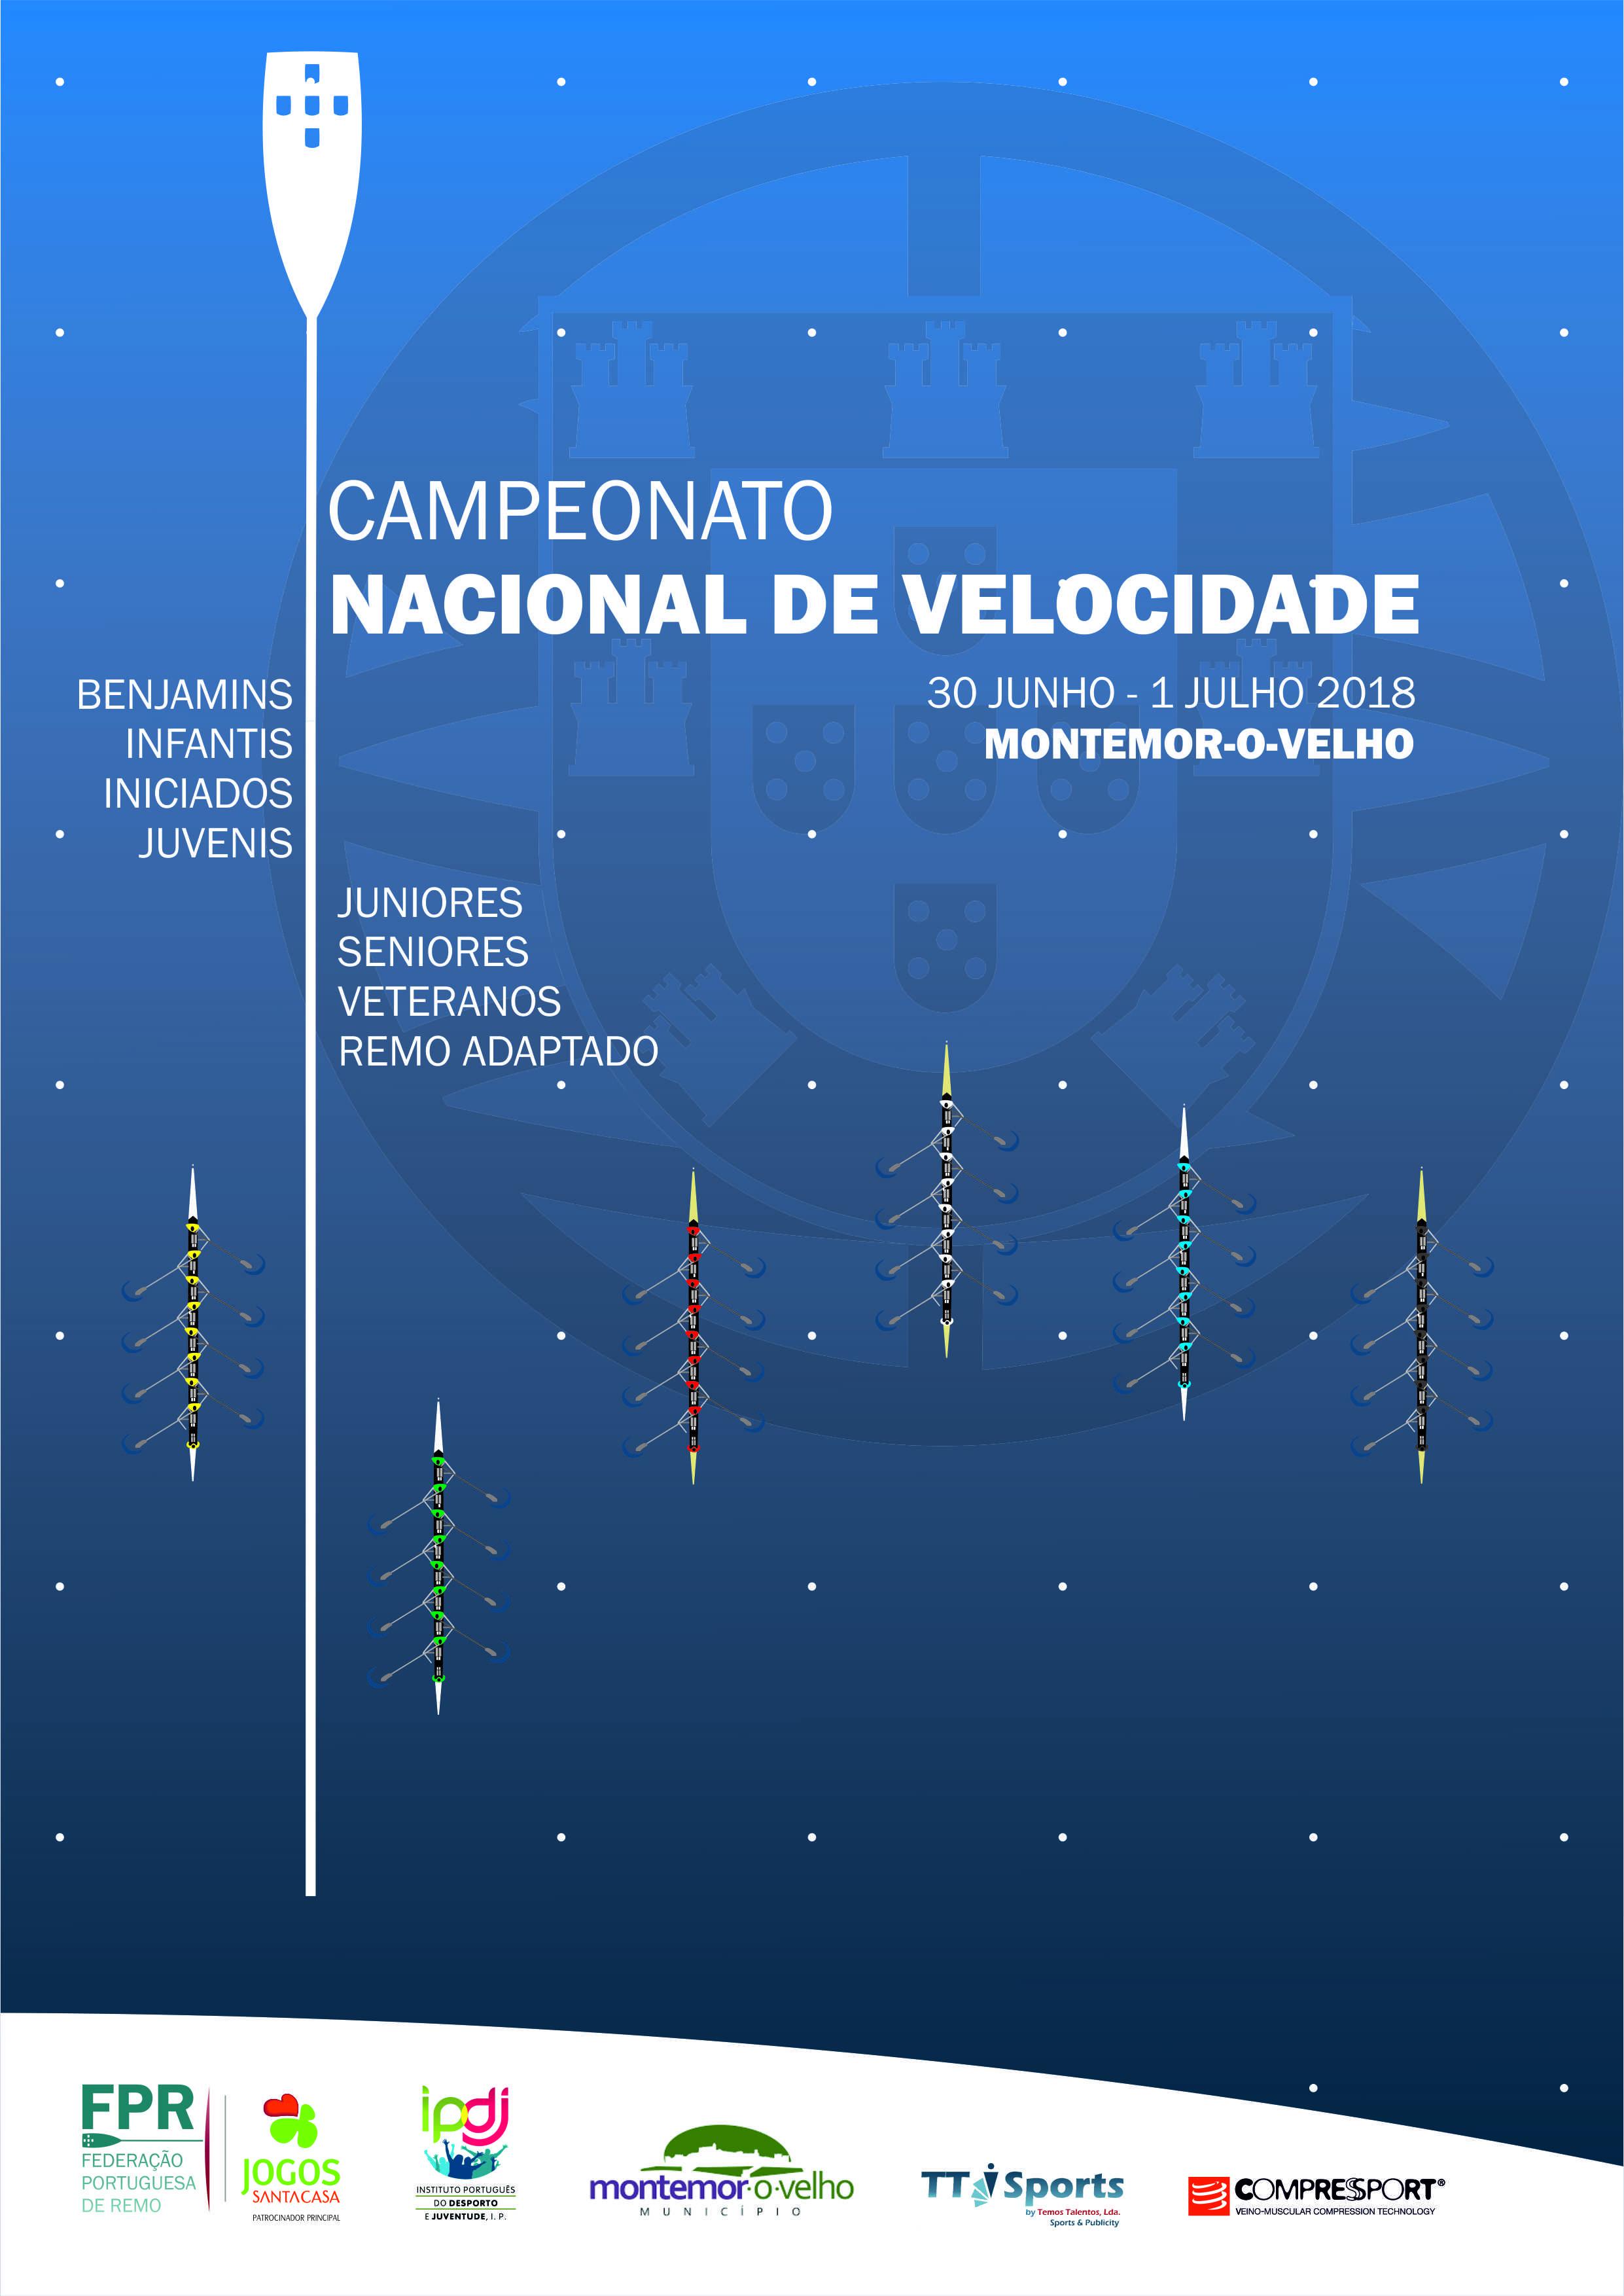 Campeonato Nacional de Velocidade